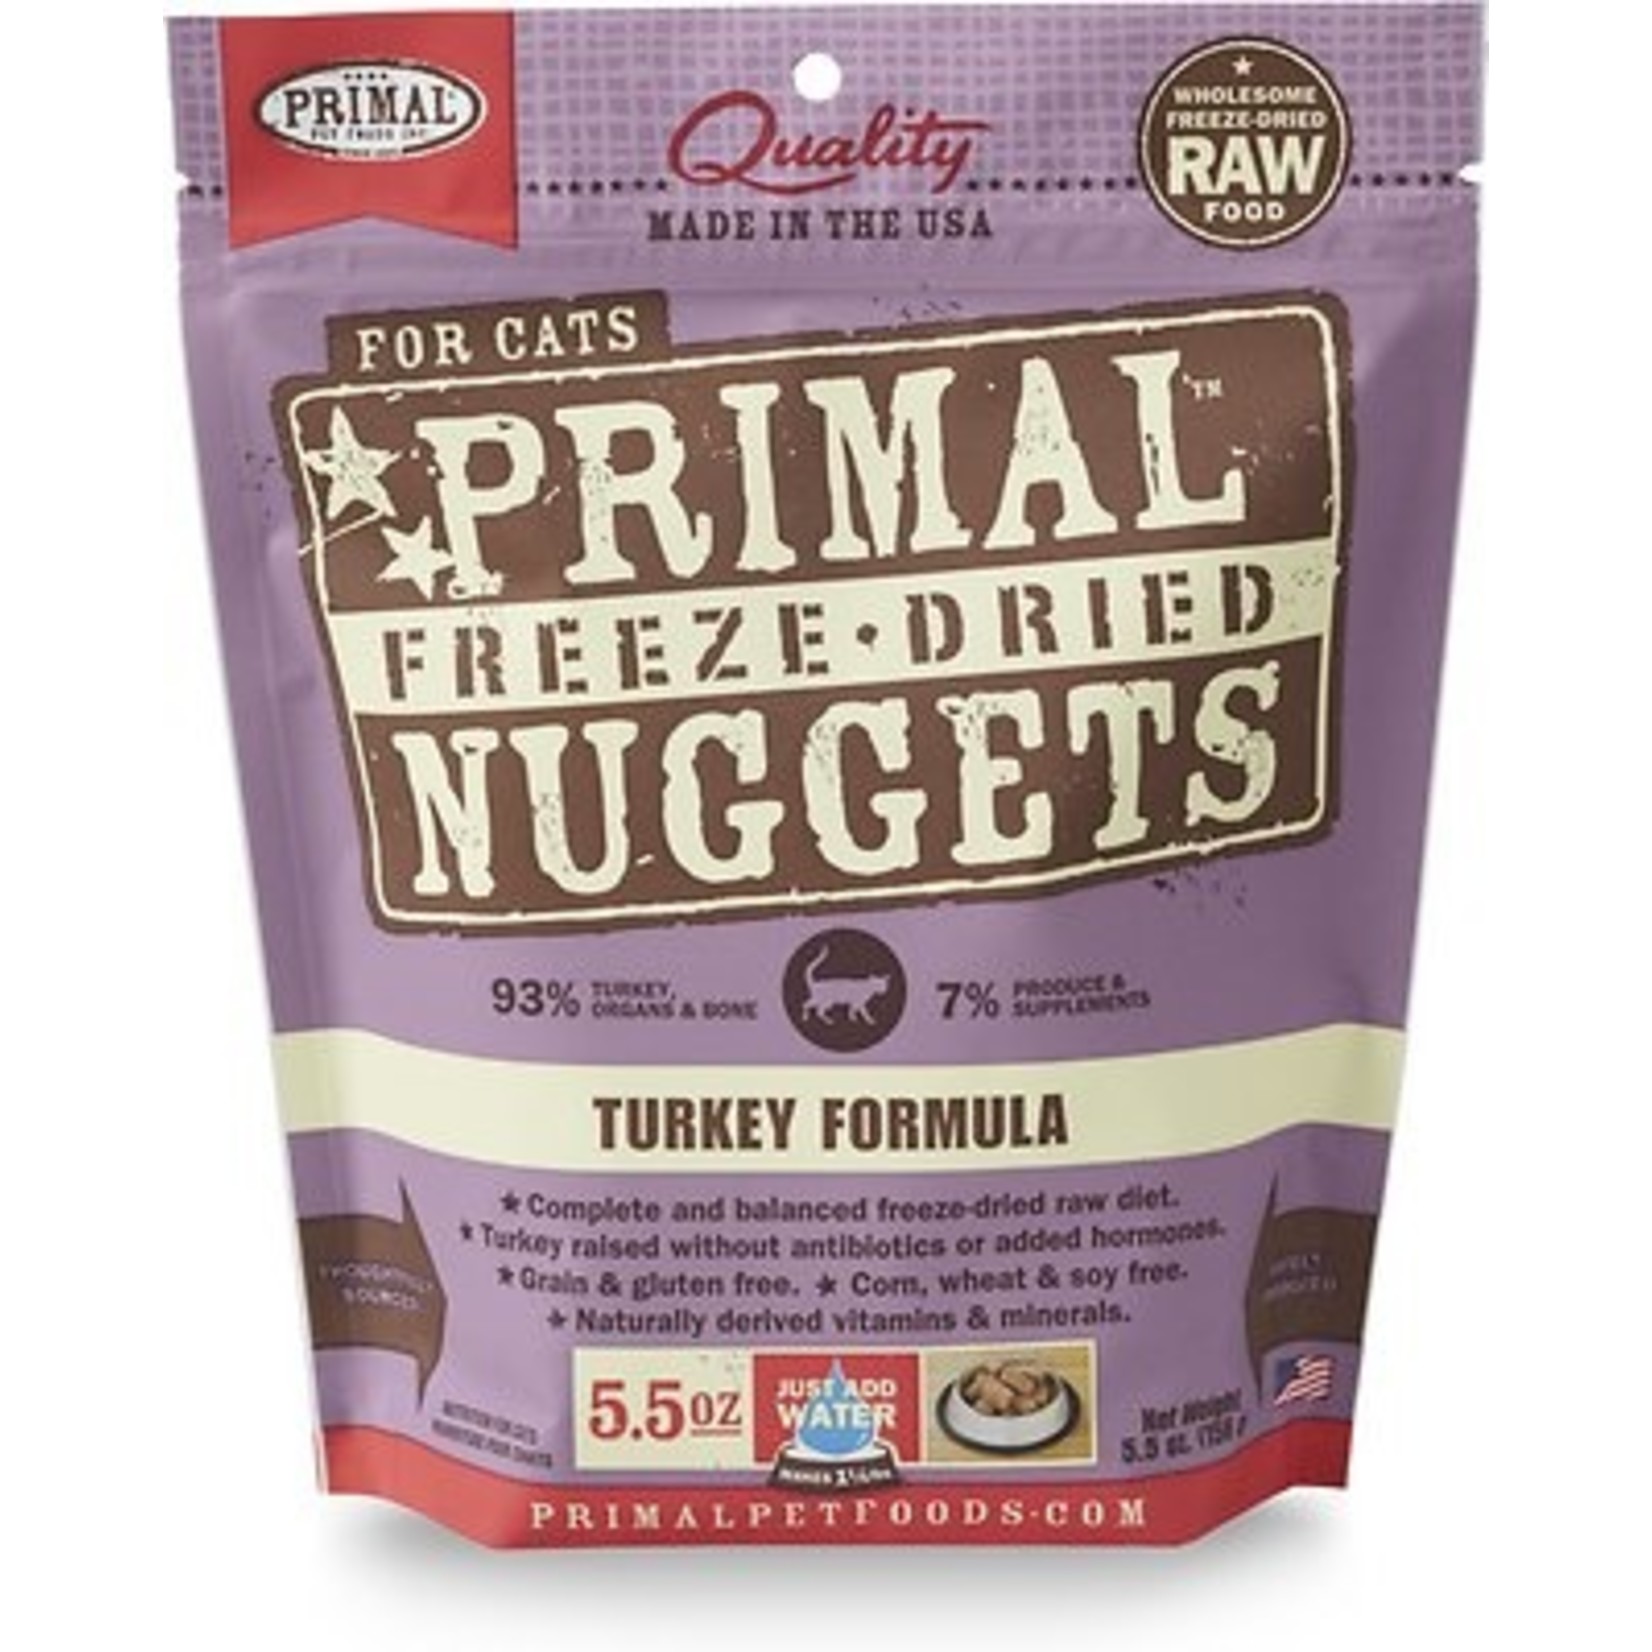 Primal Primal Freeze Dried Raw Cat Food Turkey Formula Nuggets 14oz